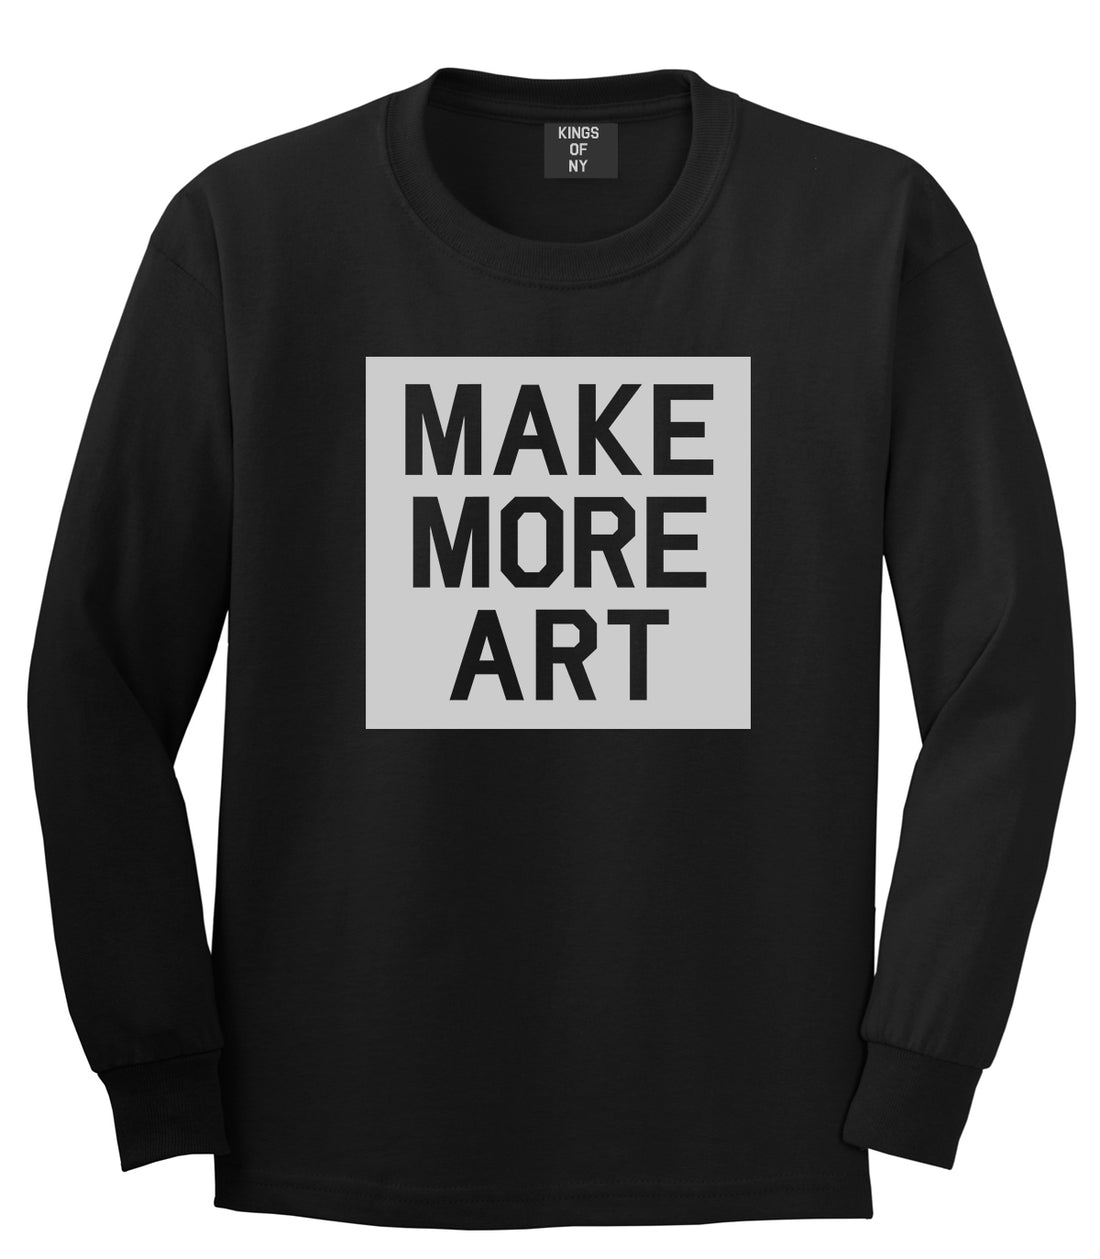 Make More Art Mens Long Sleeve T-Shirt Black by Kings Of NY